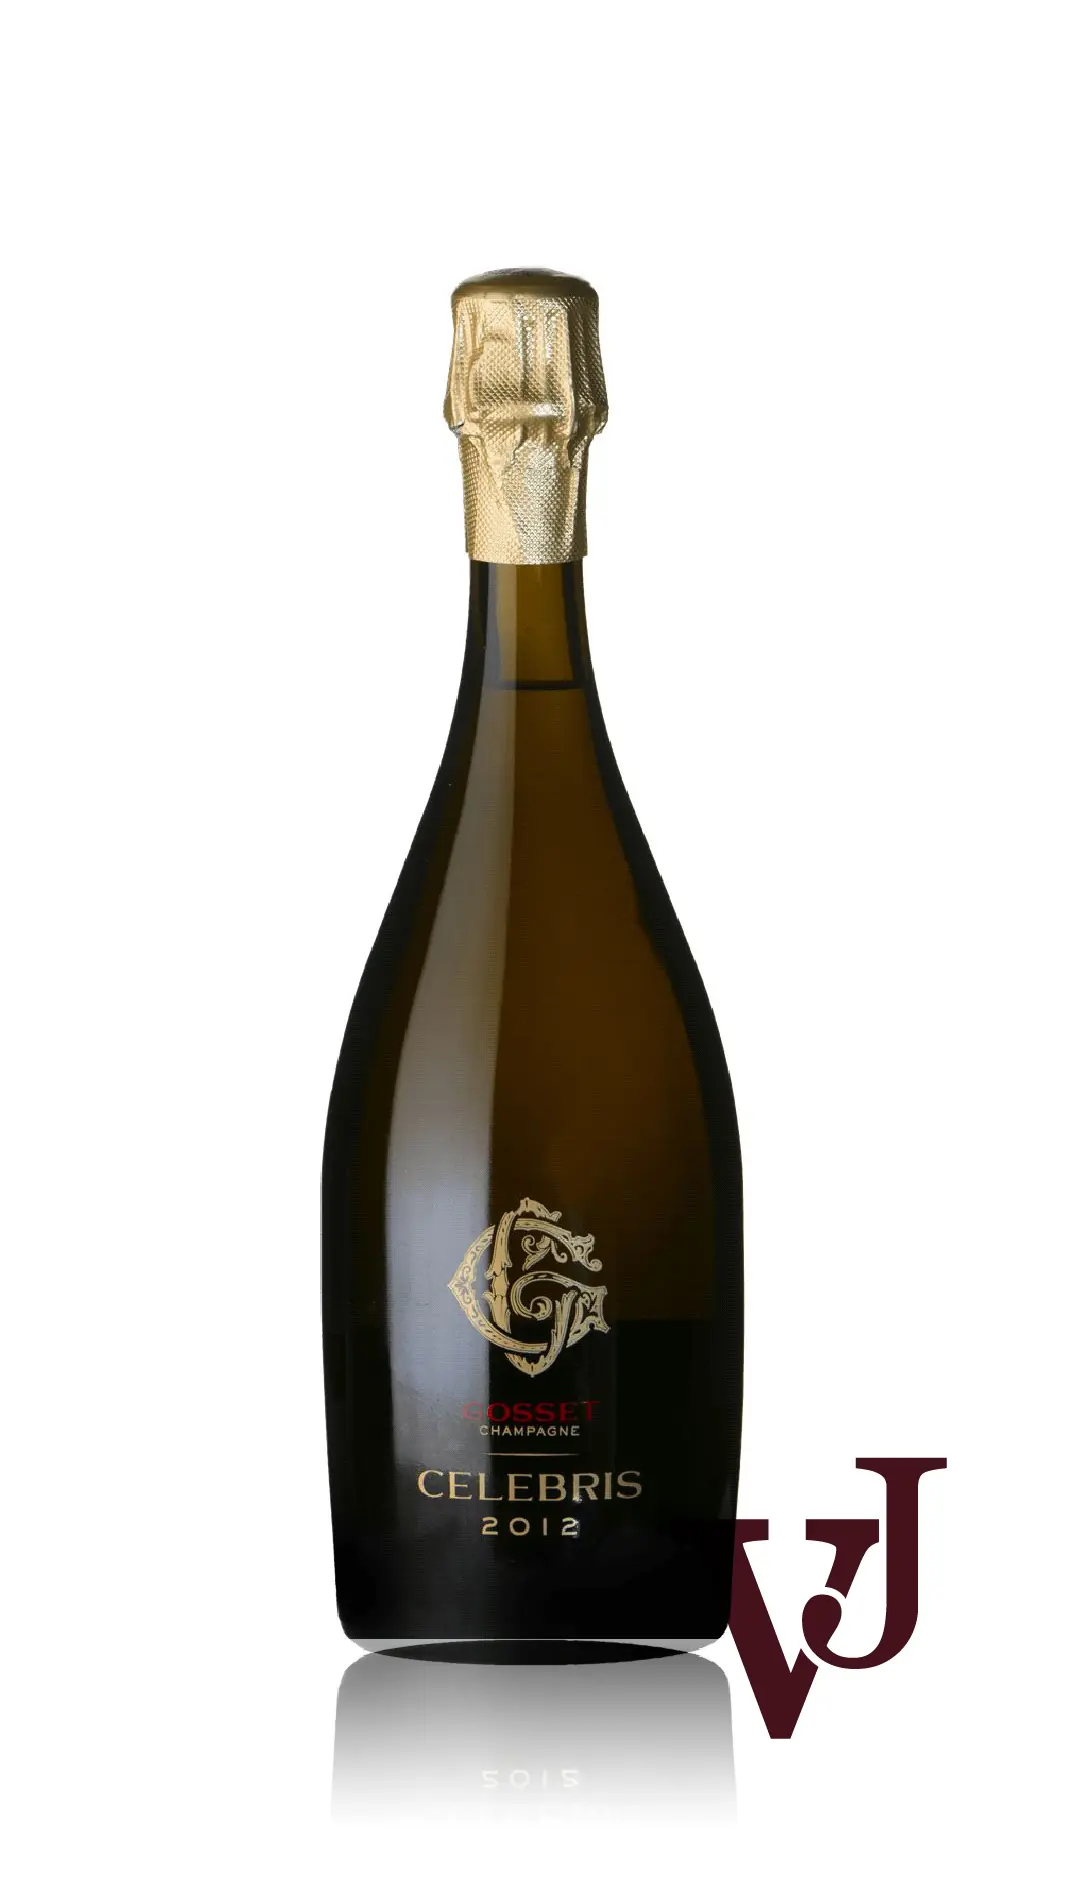 Mousserande vin - Gosset CELEBRIS Brut 2012 artikel nummer 9501401 från producenten Champagne Gosset från Frankrike - Vinjournalen.se